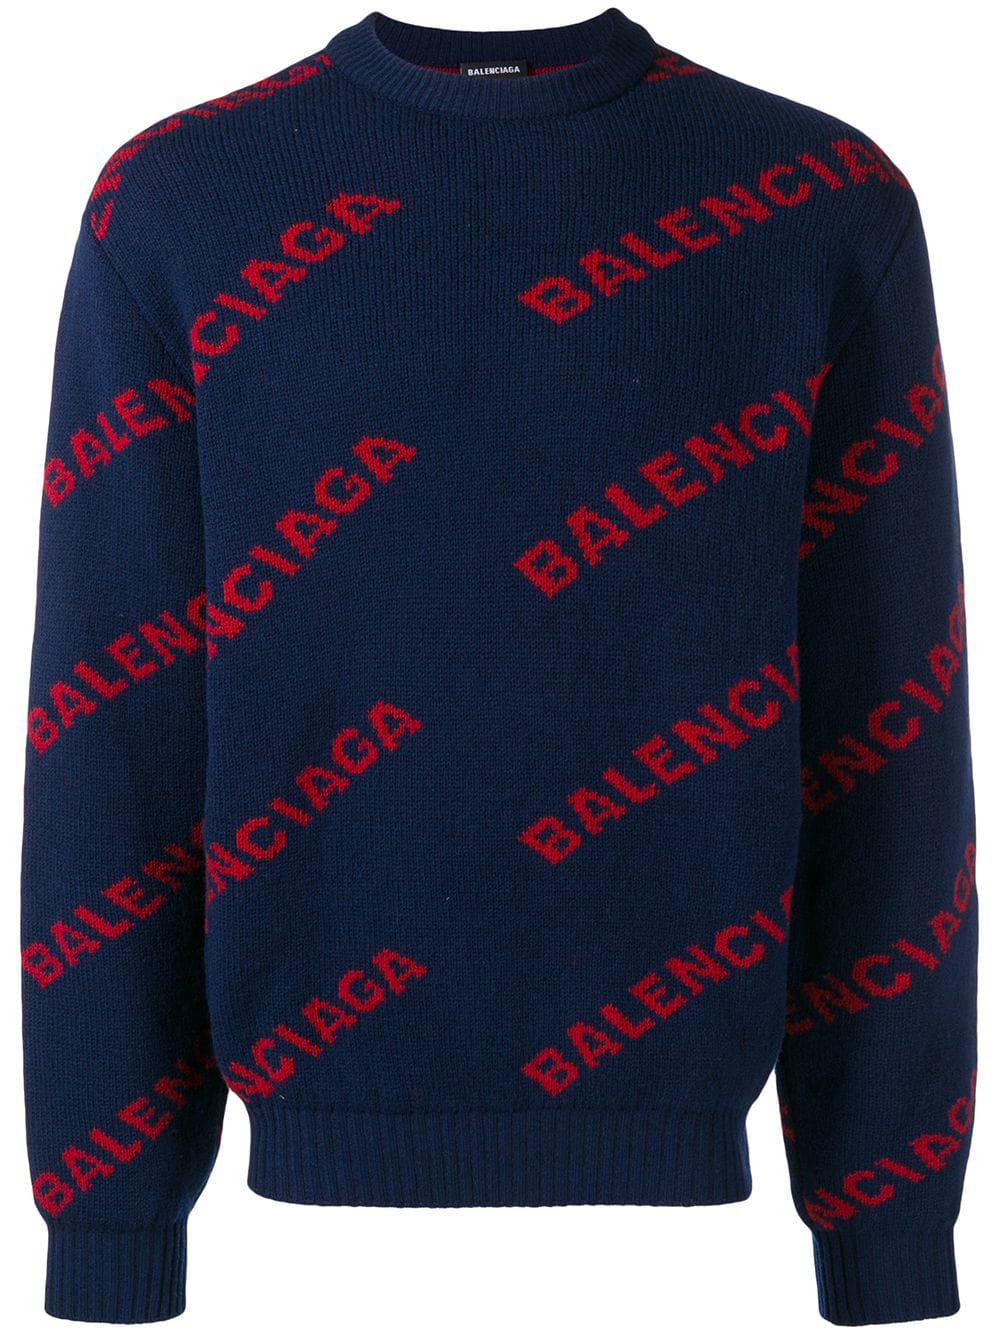 Balenciaga Navy Blue Logo Knitted Wool Jumper for Men - Lyst